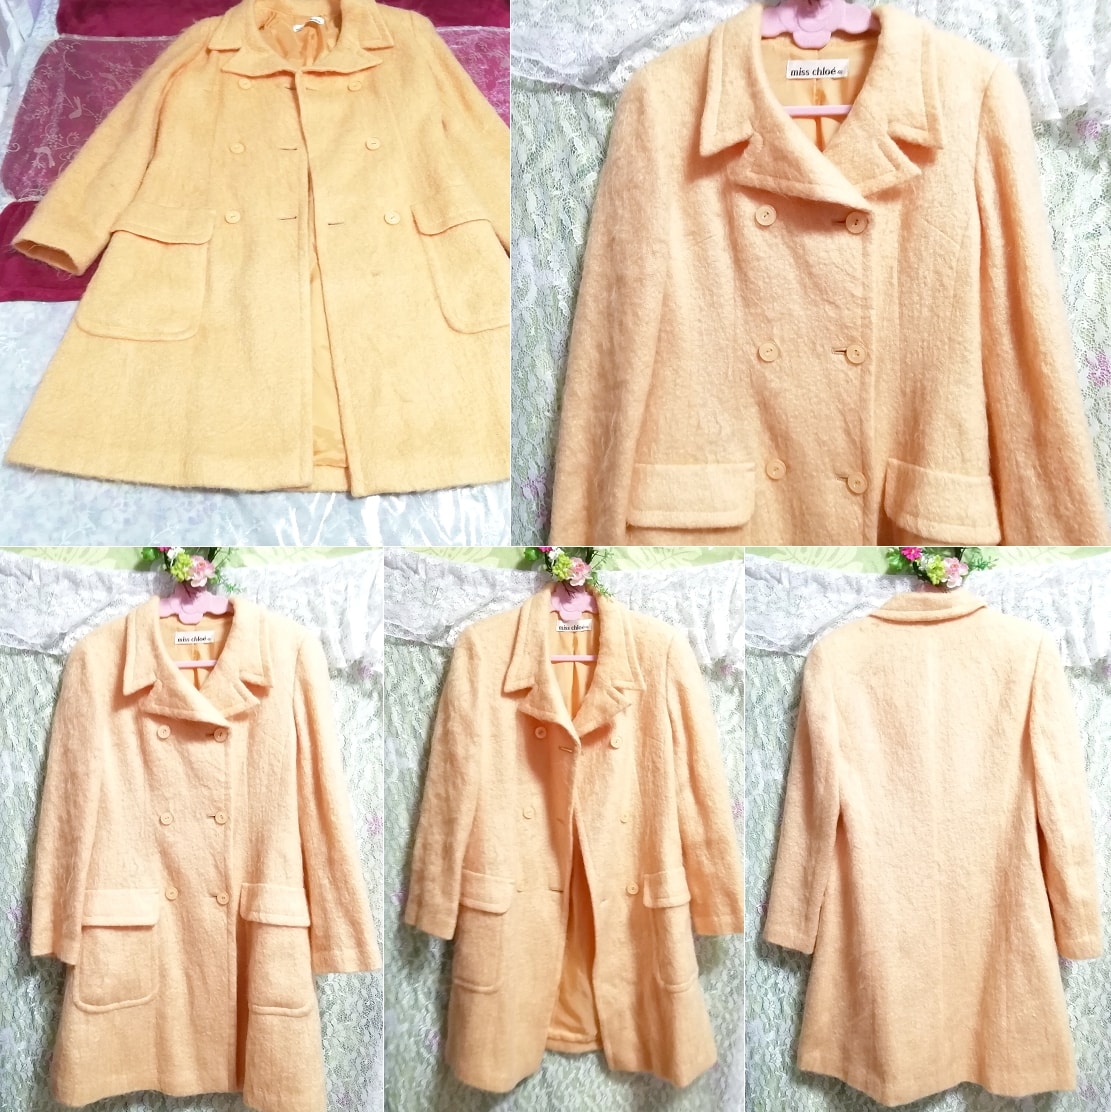 Capa haori japonesa de pelo naranja, abrigo, abrigo en general, talla m